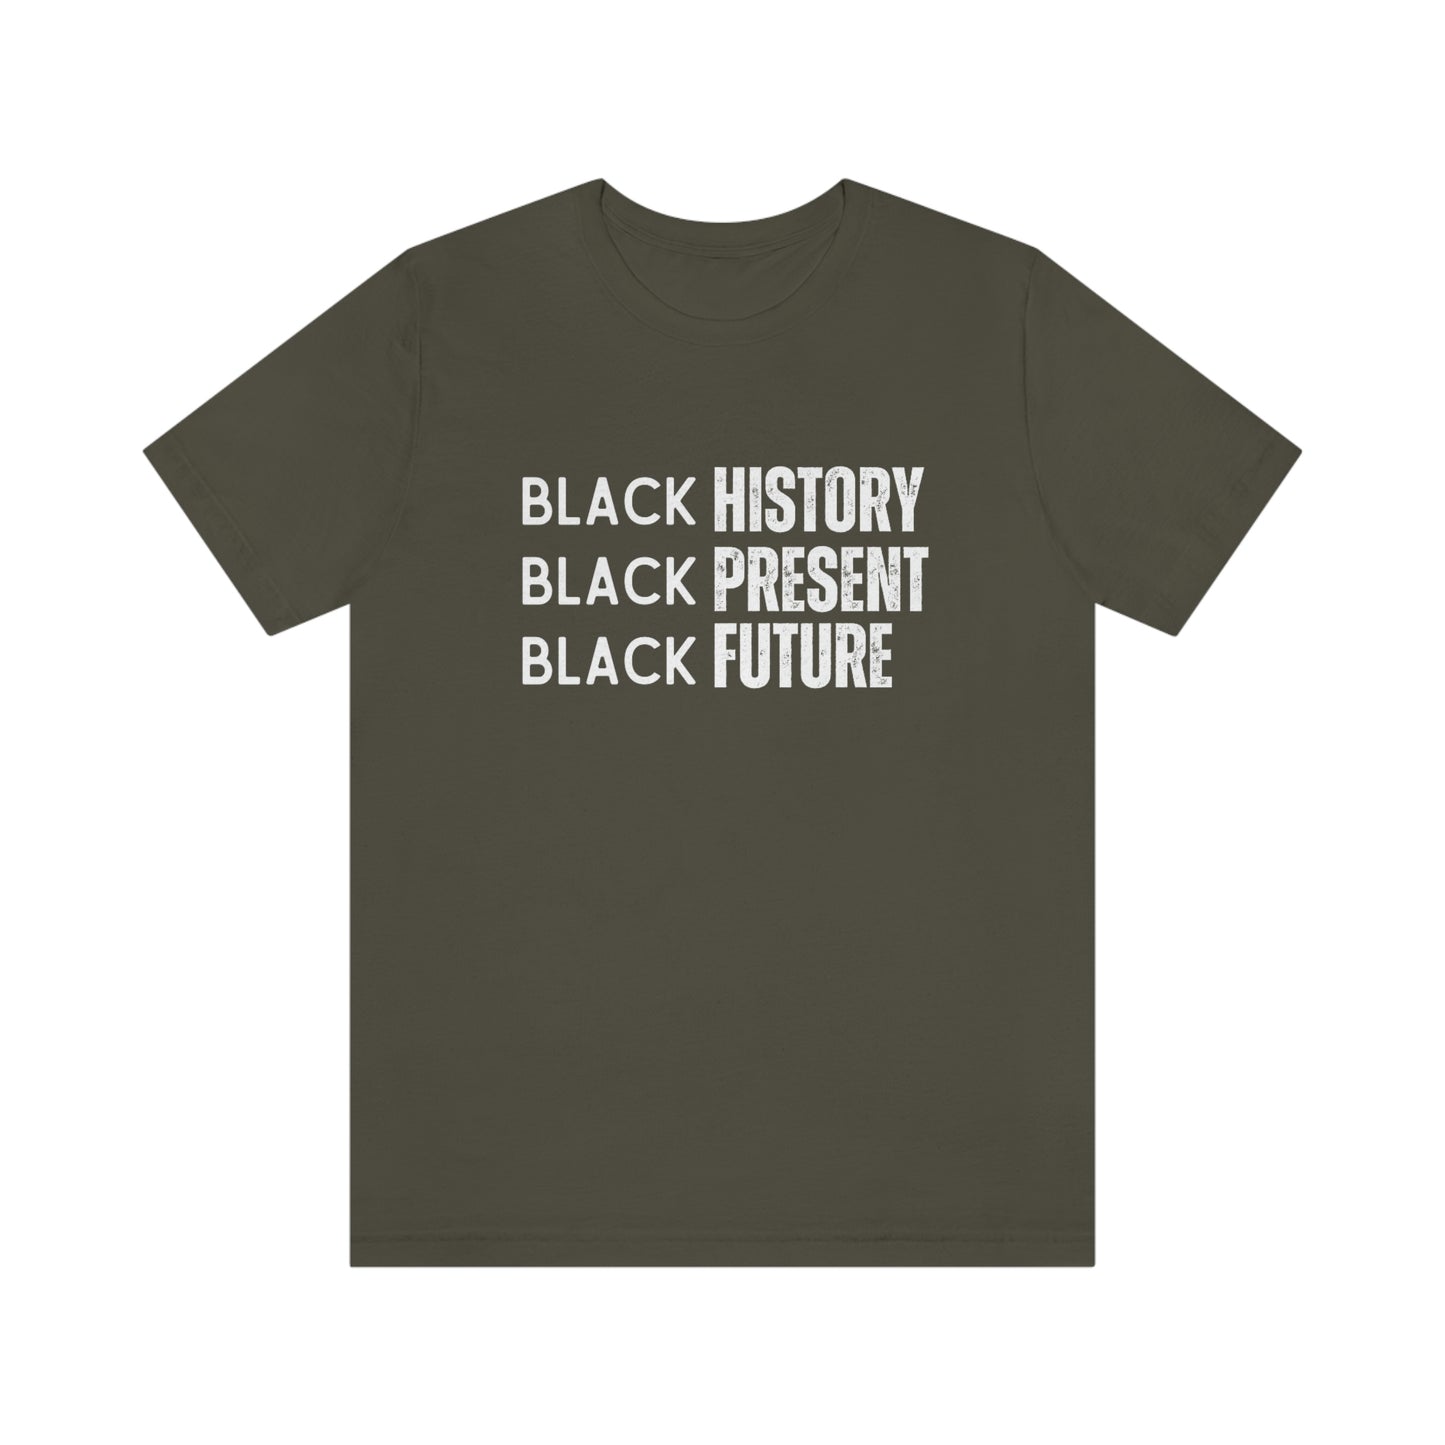 Black History Month Shirt, Black Pride, Black Future, Minimalist Black History Shirt, Juneteenth Shirt, Black Culture Shirt